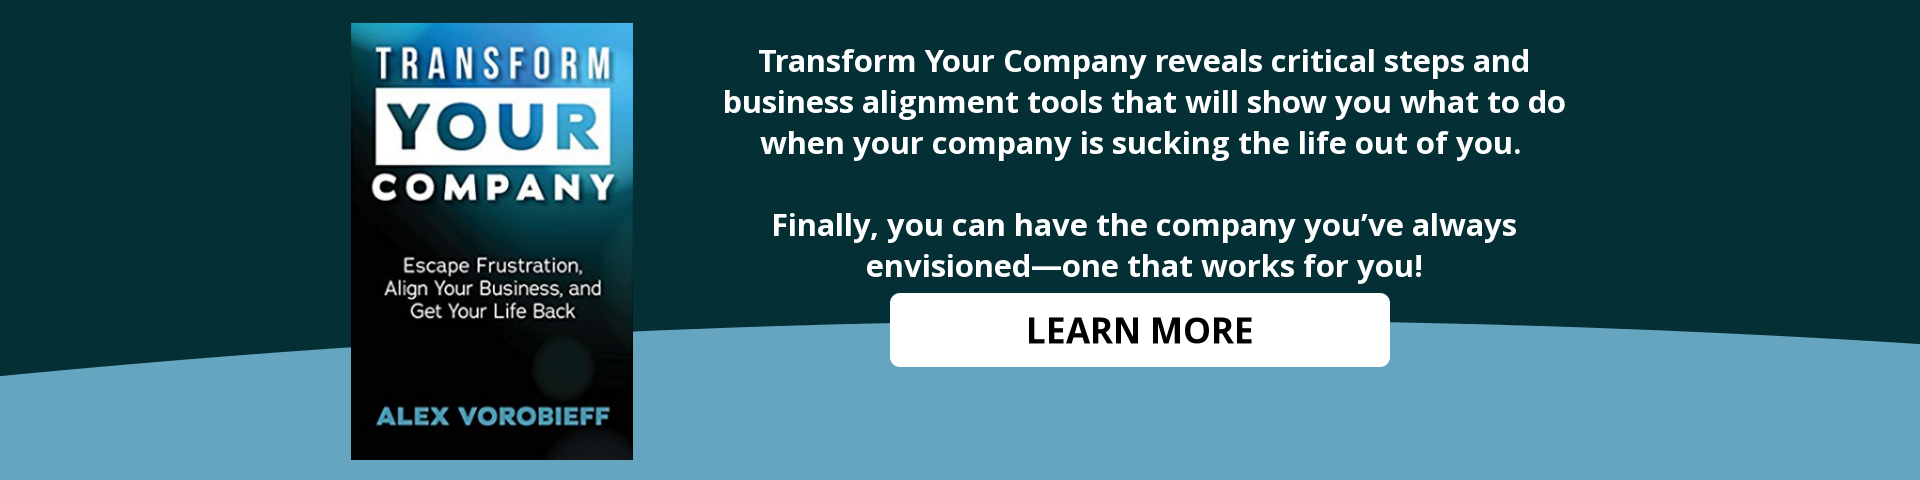 Transform Your Company by Alex Vorobieff